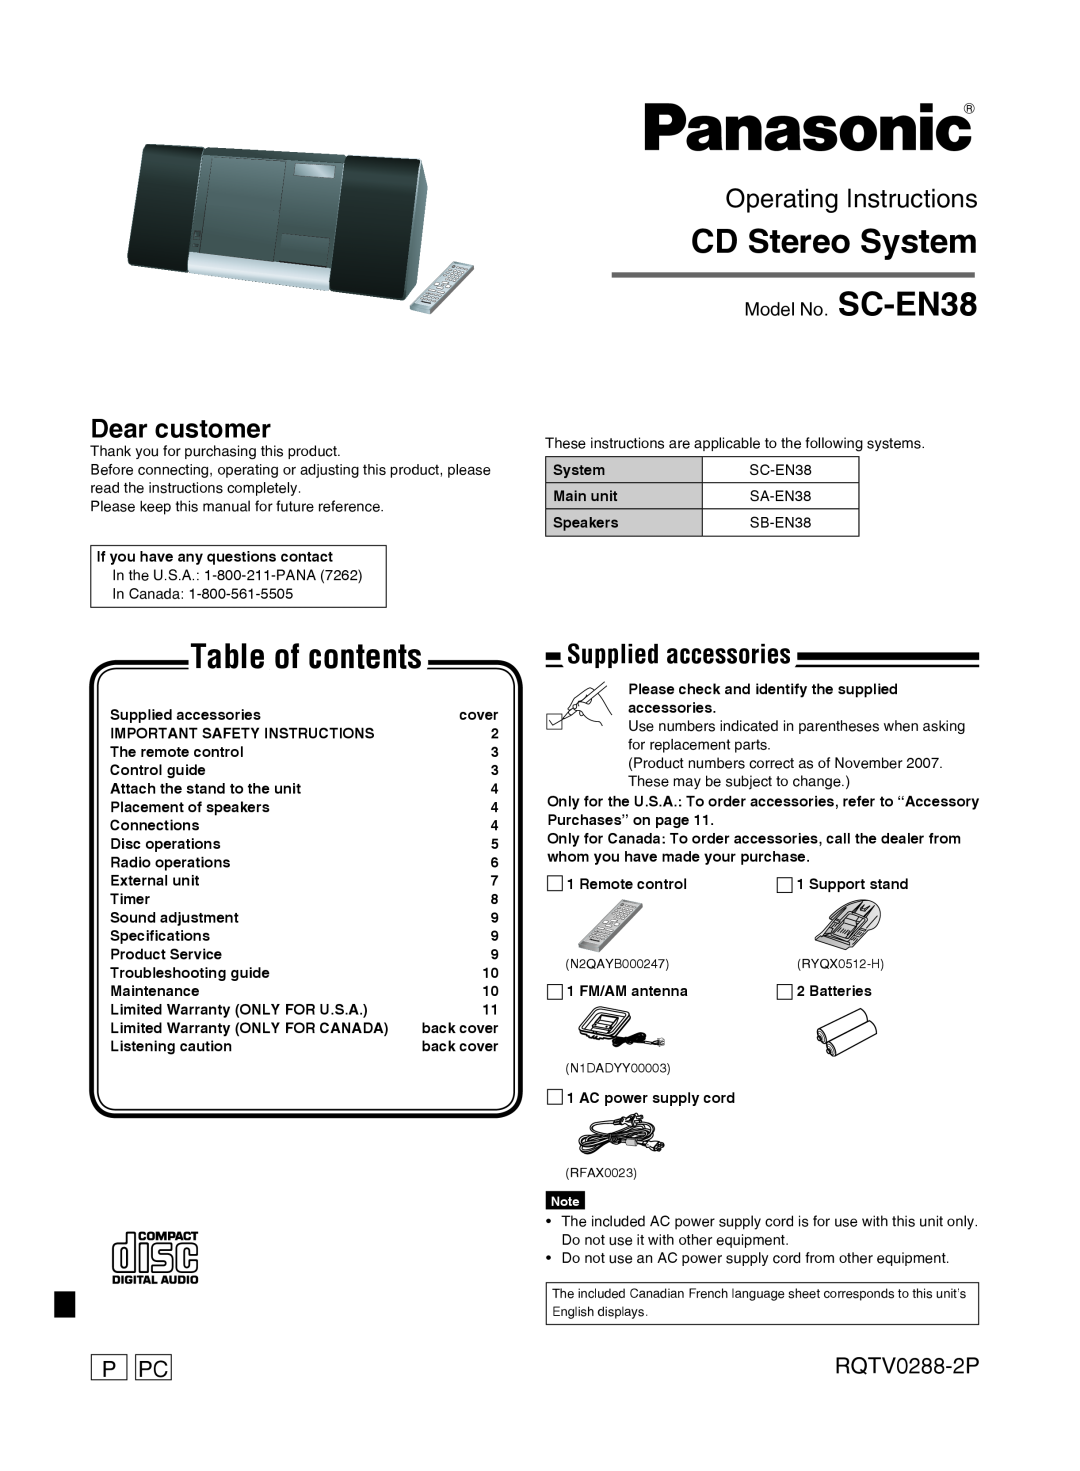 Panasonic SCEN38 important safety instructions Supplied accessories, P Pc, RQTV0288-2P, Model No. SC-EN38 